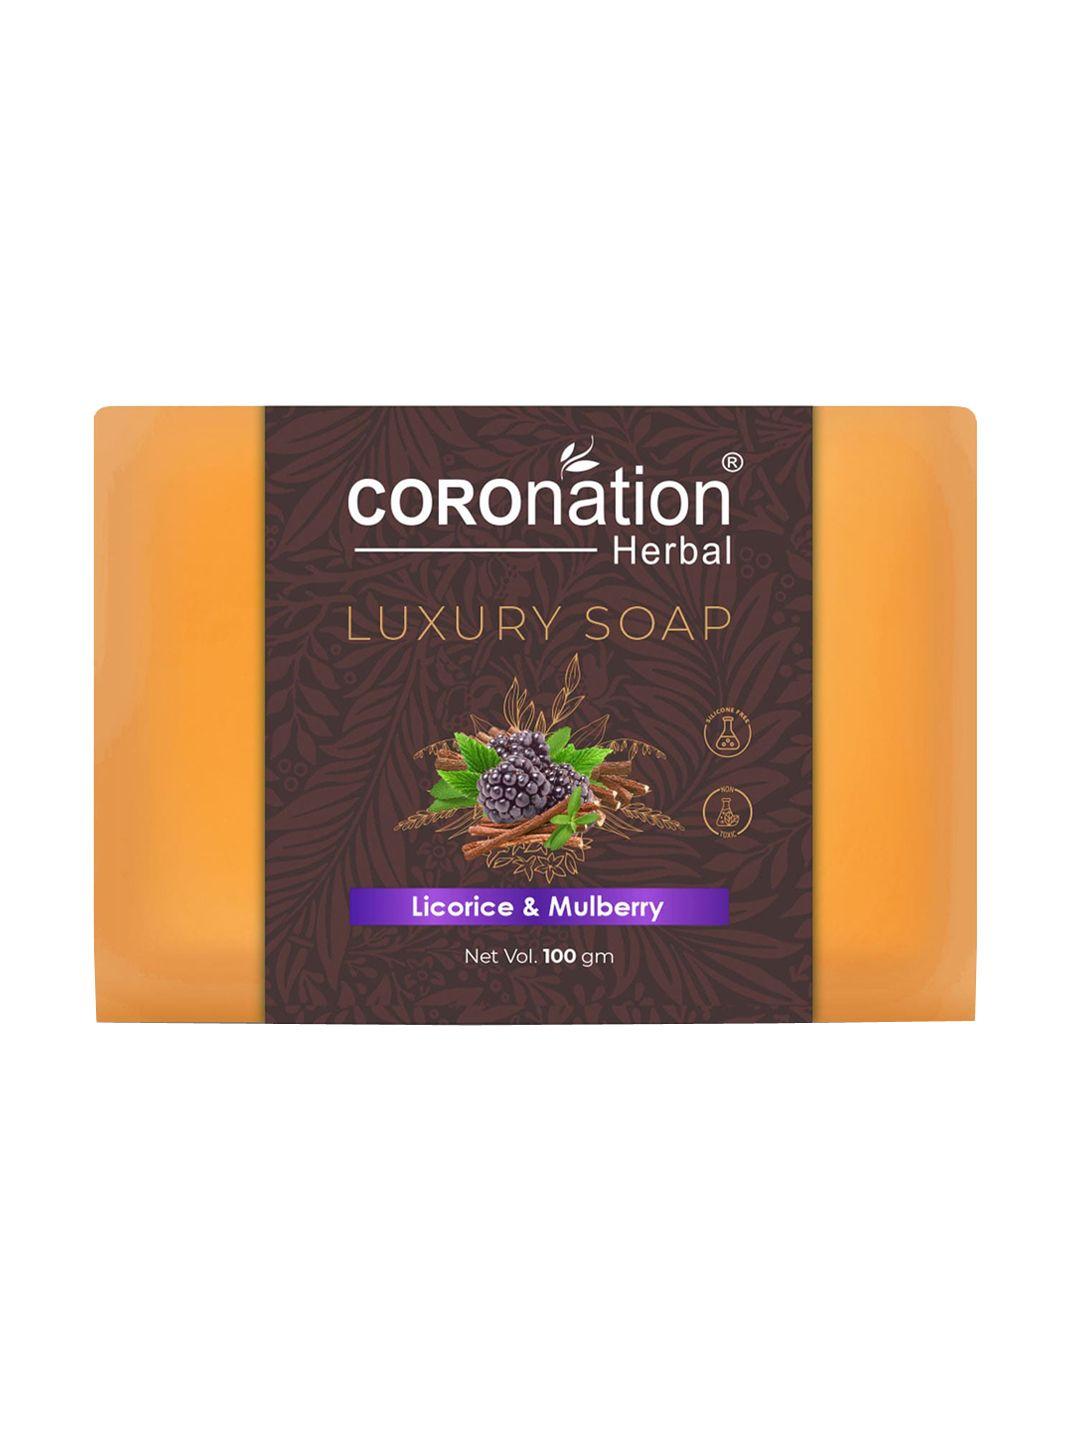 coronation herbal licorice & mulberry luxury soap - 100 g